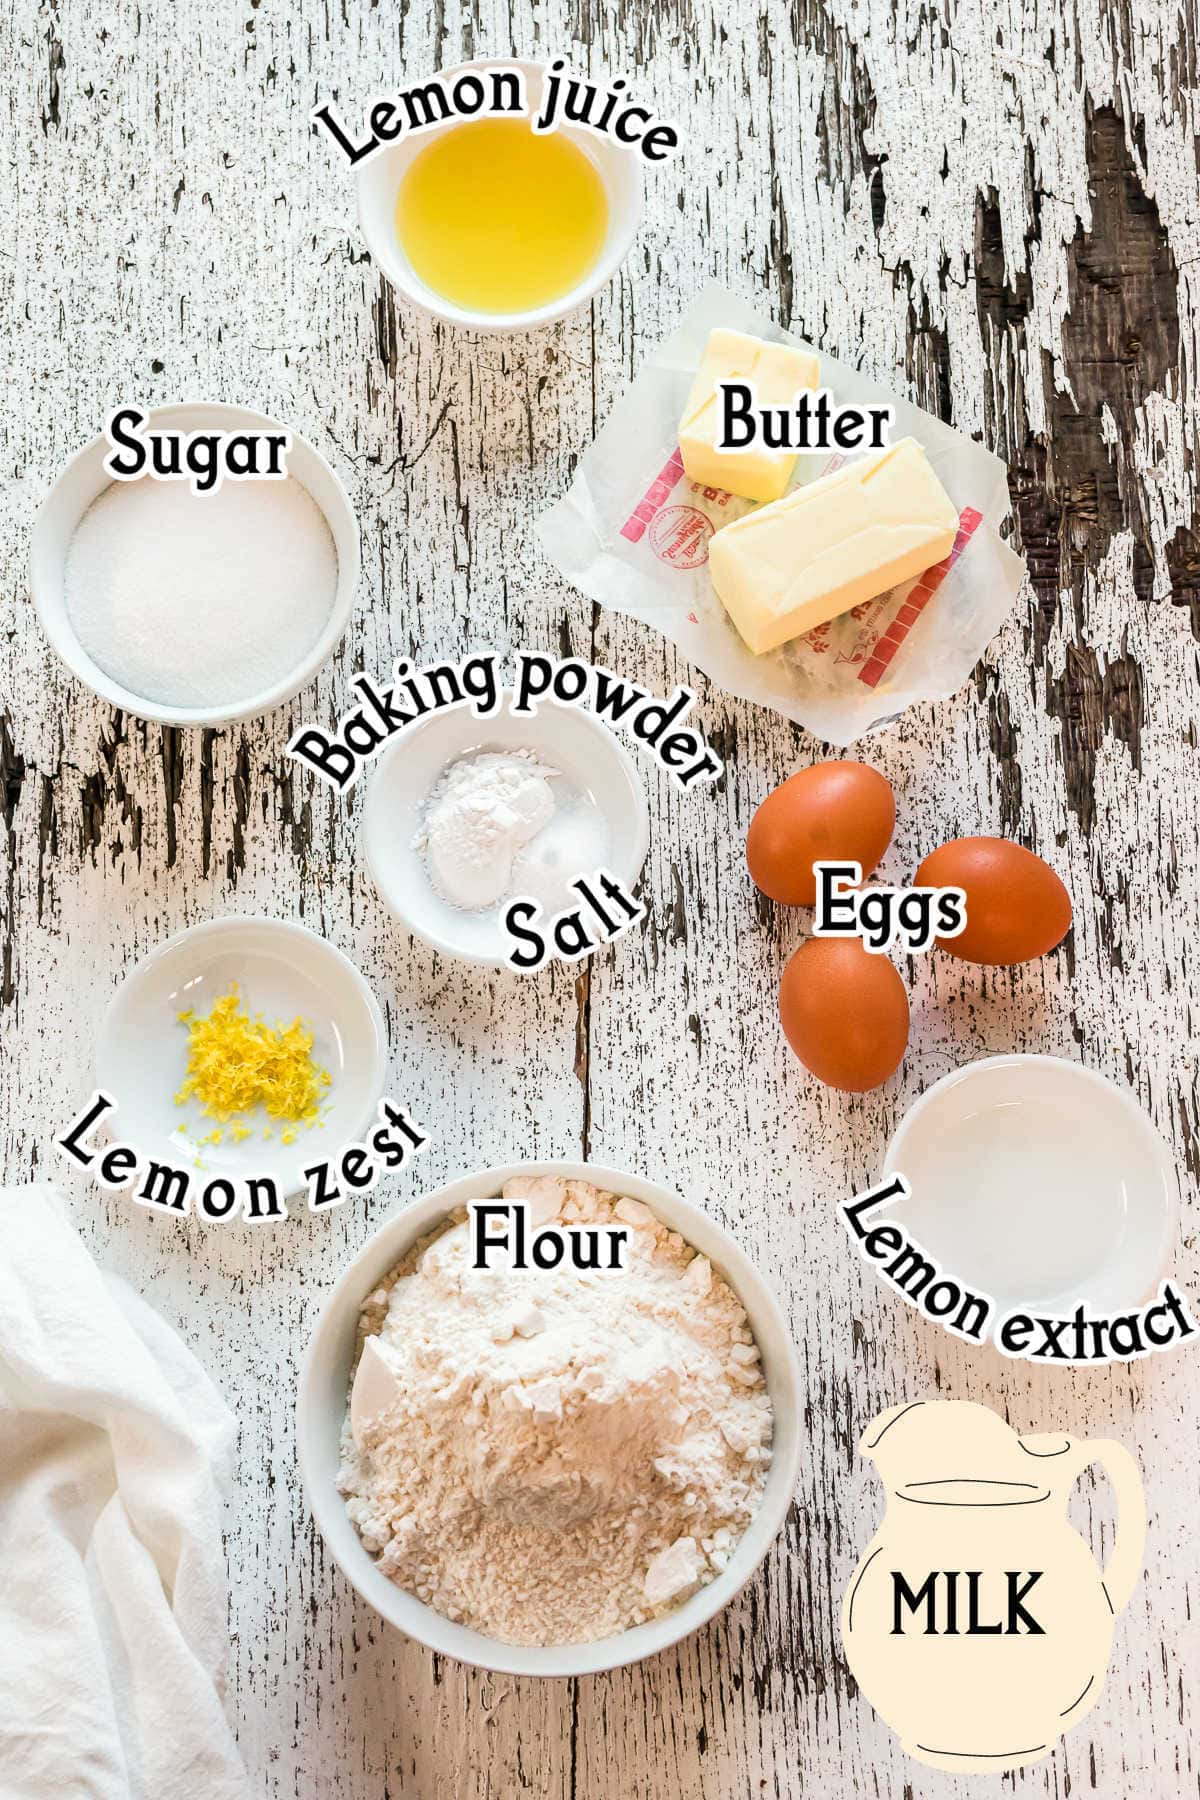 Labeled ingredients for lemon cake.